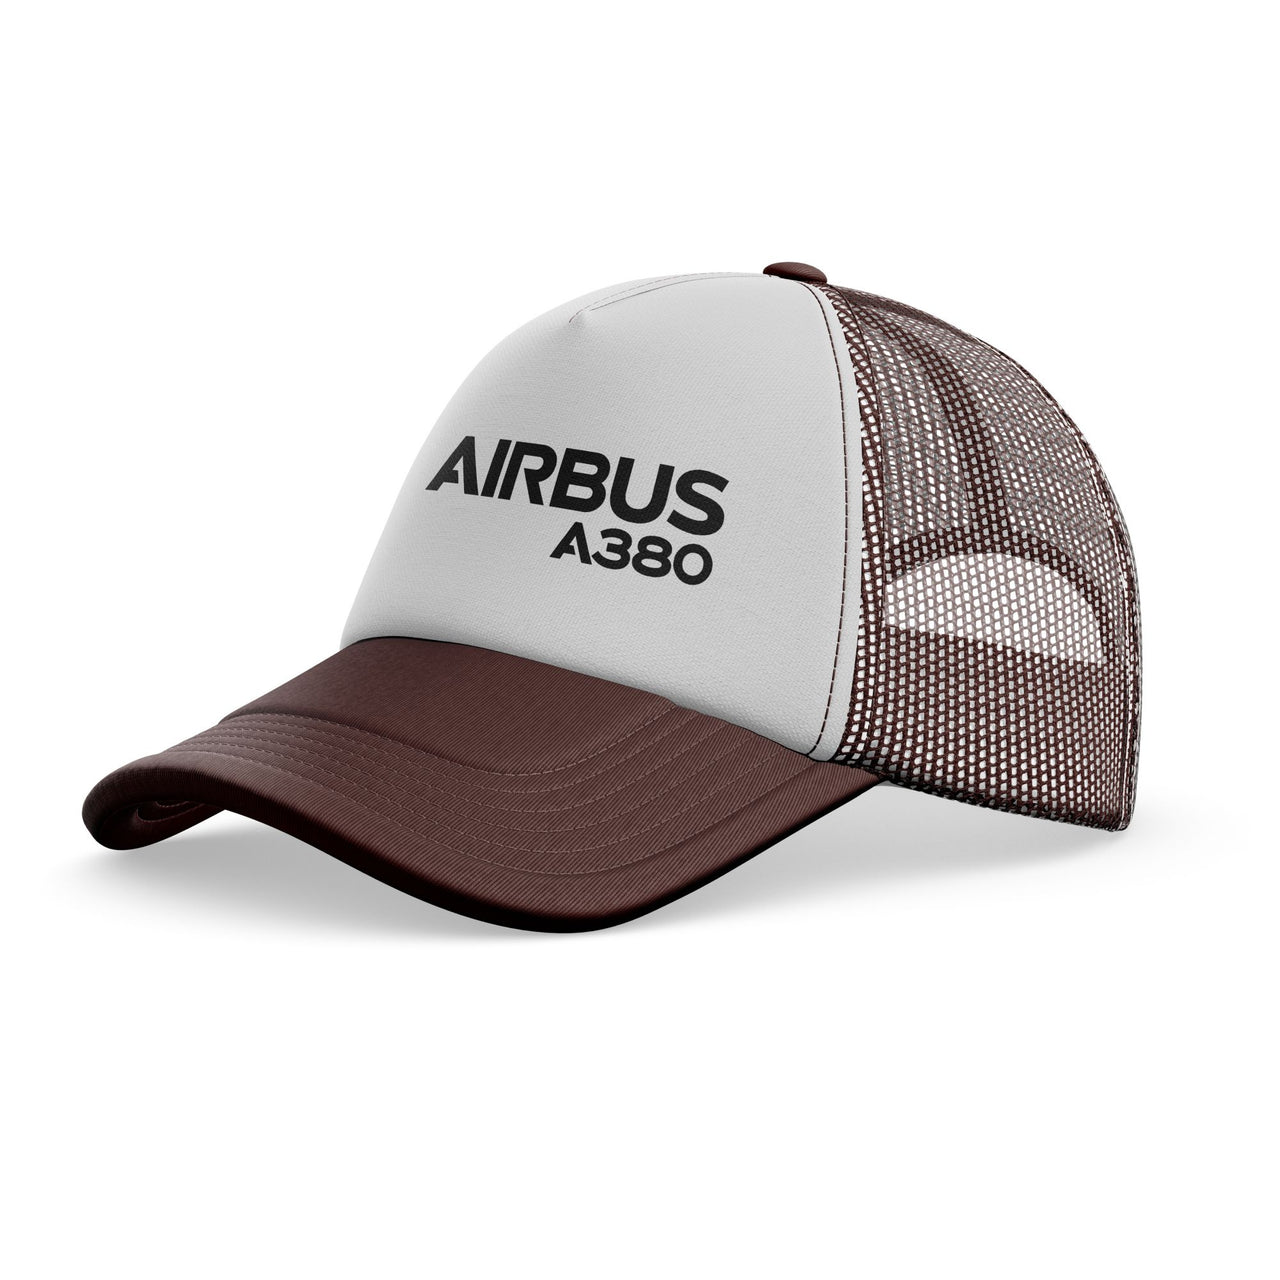 Airbus A380 & Text Designed Trucker Caps & Hats